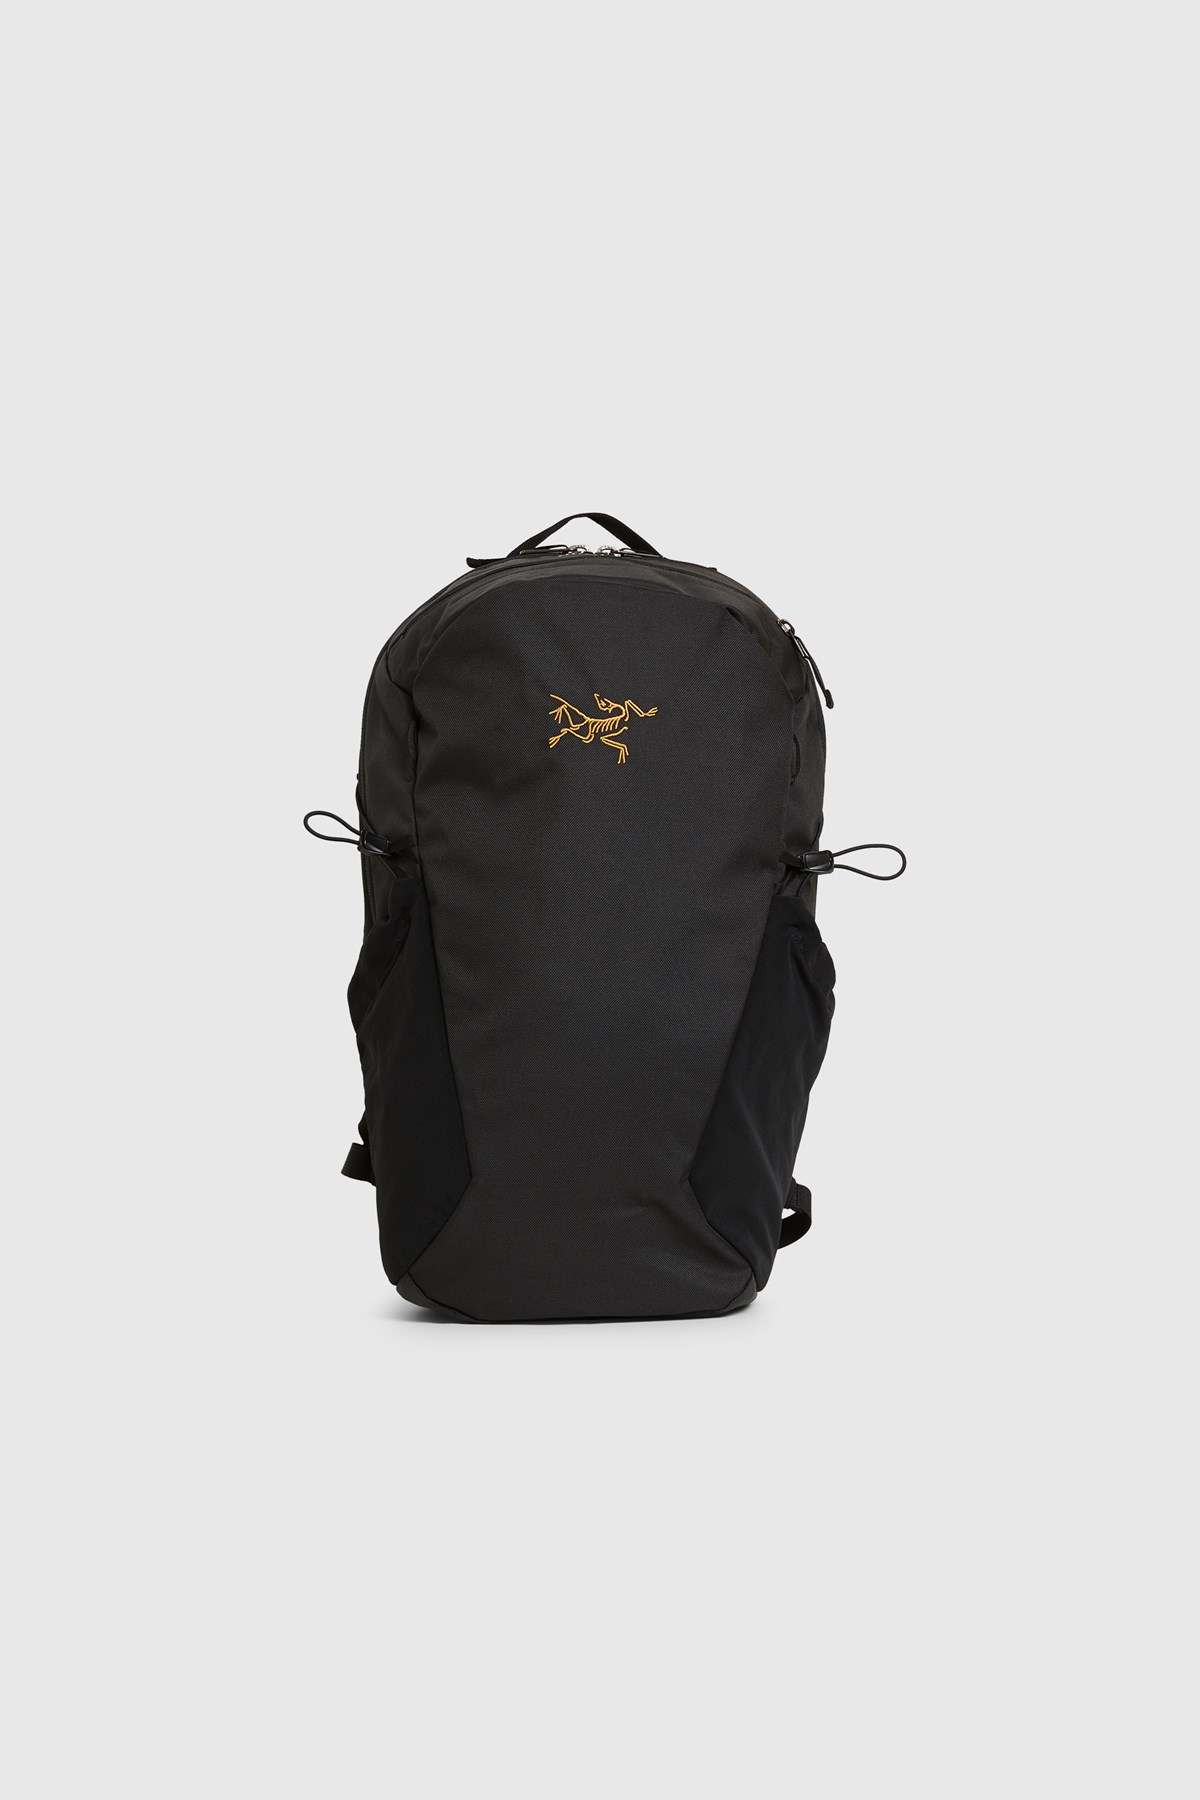 ARC'TERYX Mantis 16 Backpack Black | WoodWood.com